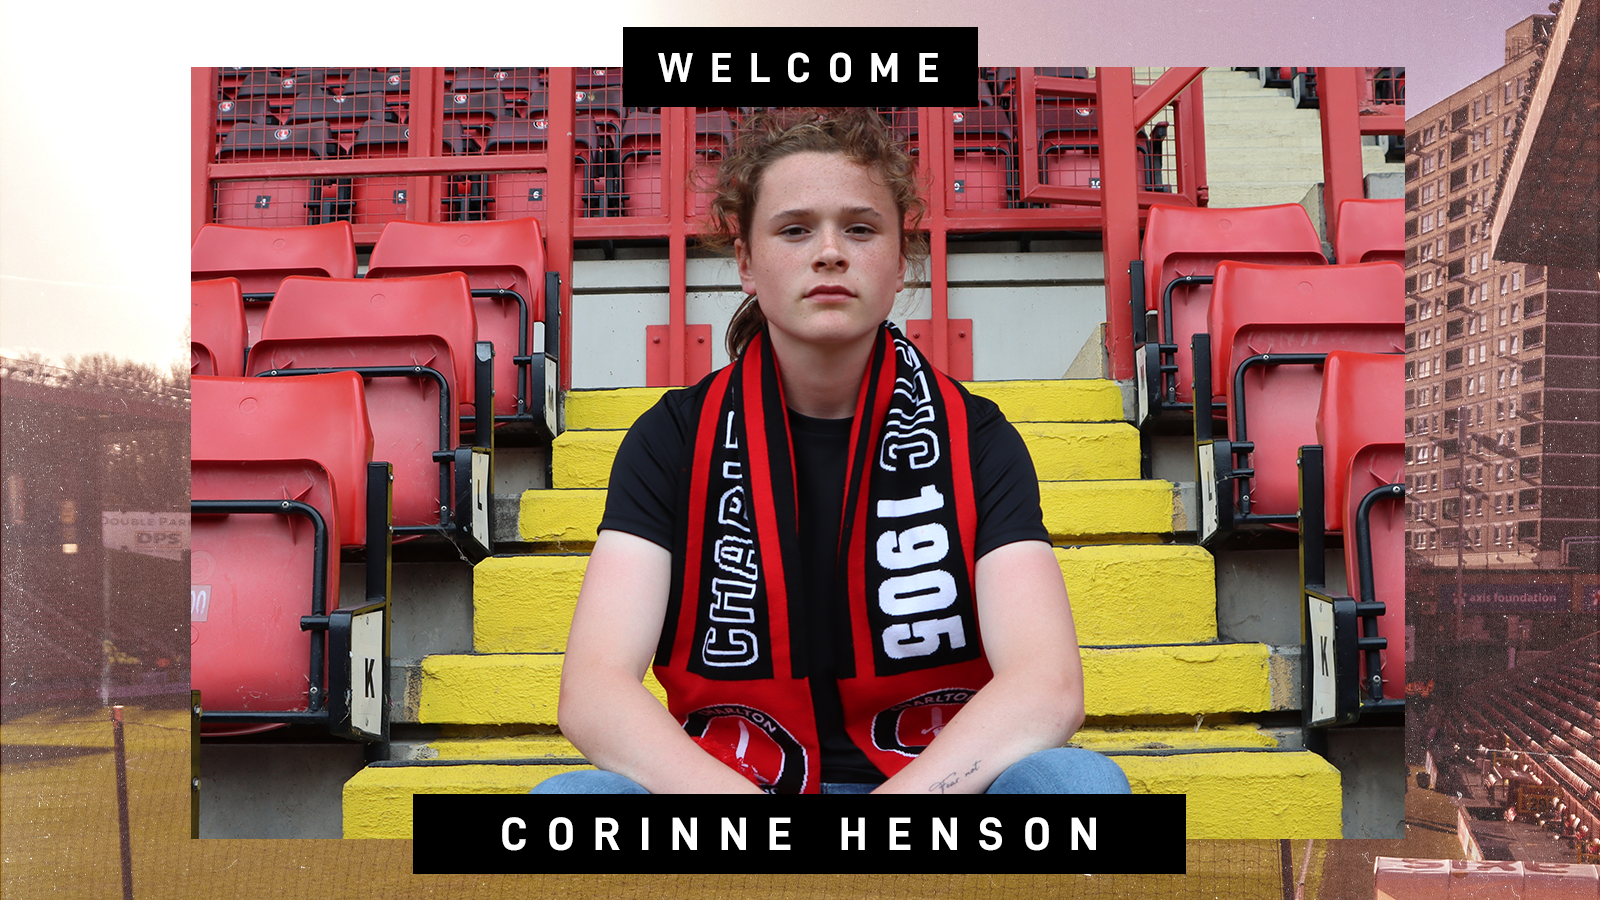 Welcome Corinne Henson!